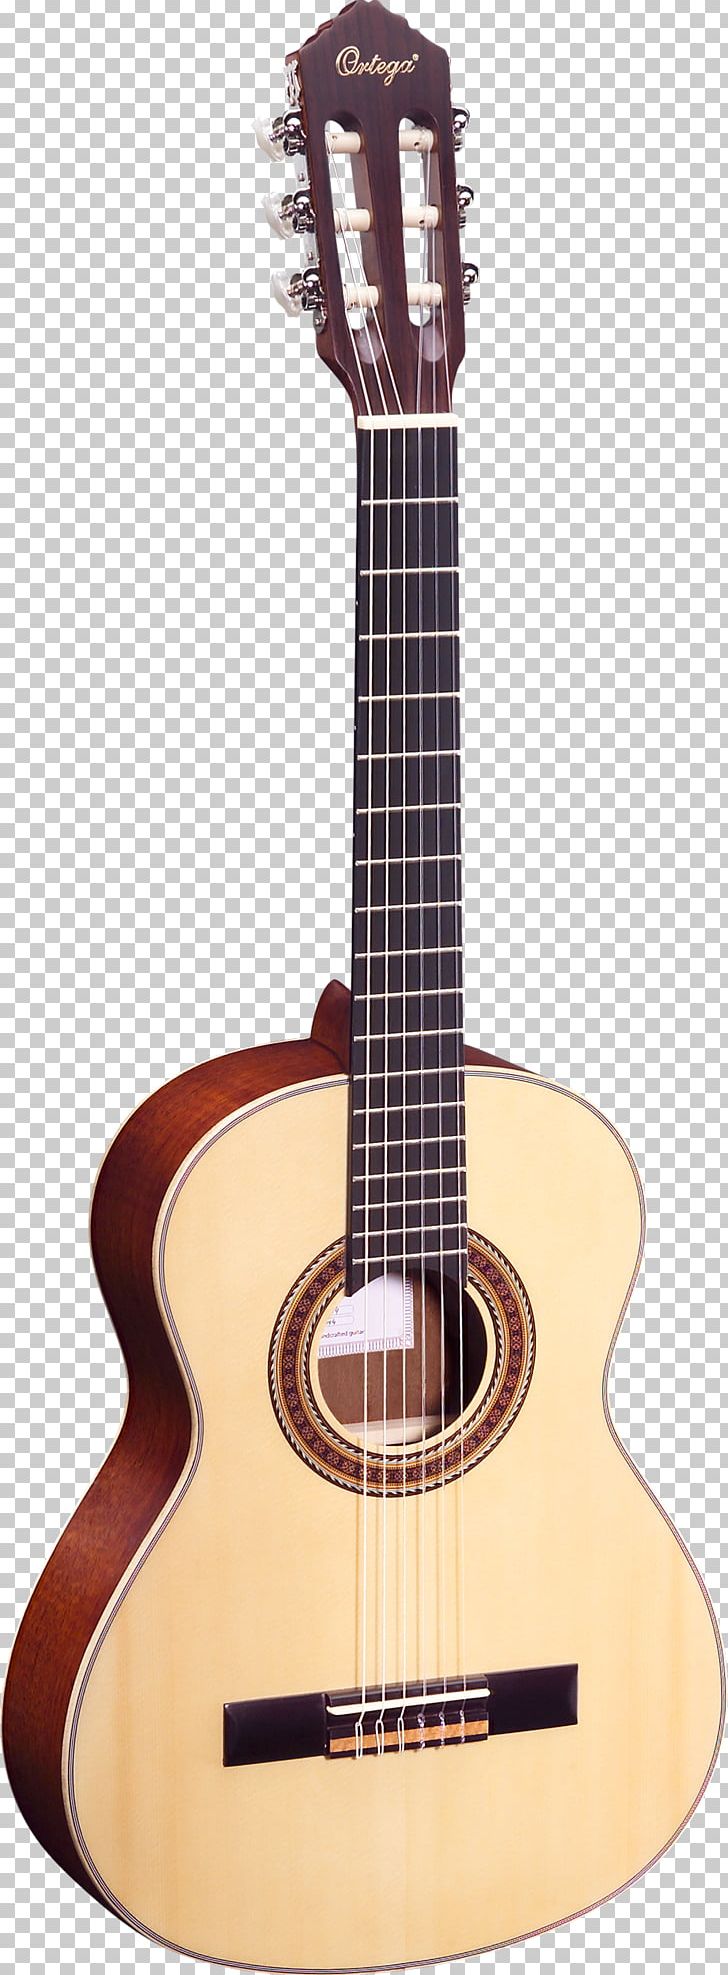 Twelve-string Guitar Steel-string Acoustic Guitar Acoustic-electric Guitar Musical Instruments PNG, Clipart, Amancio Ortega, Classical Guitar, Cuatro, Cutaway, Guitar Accessory Free PNG Download